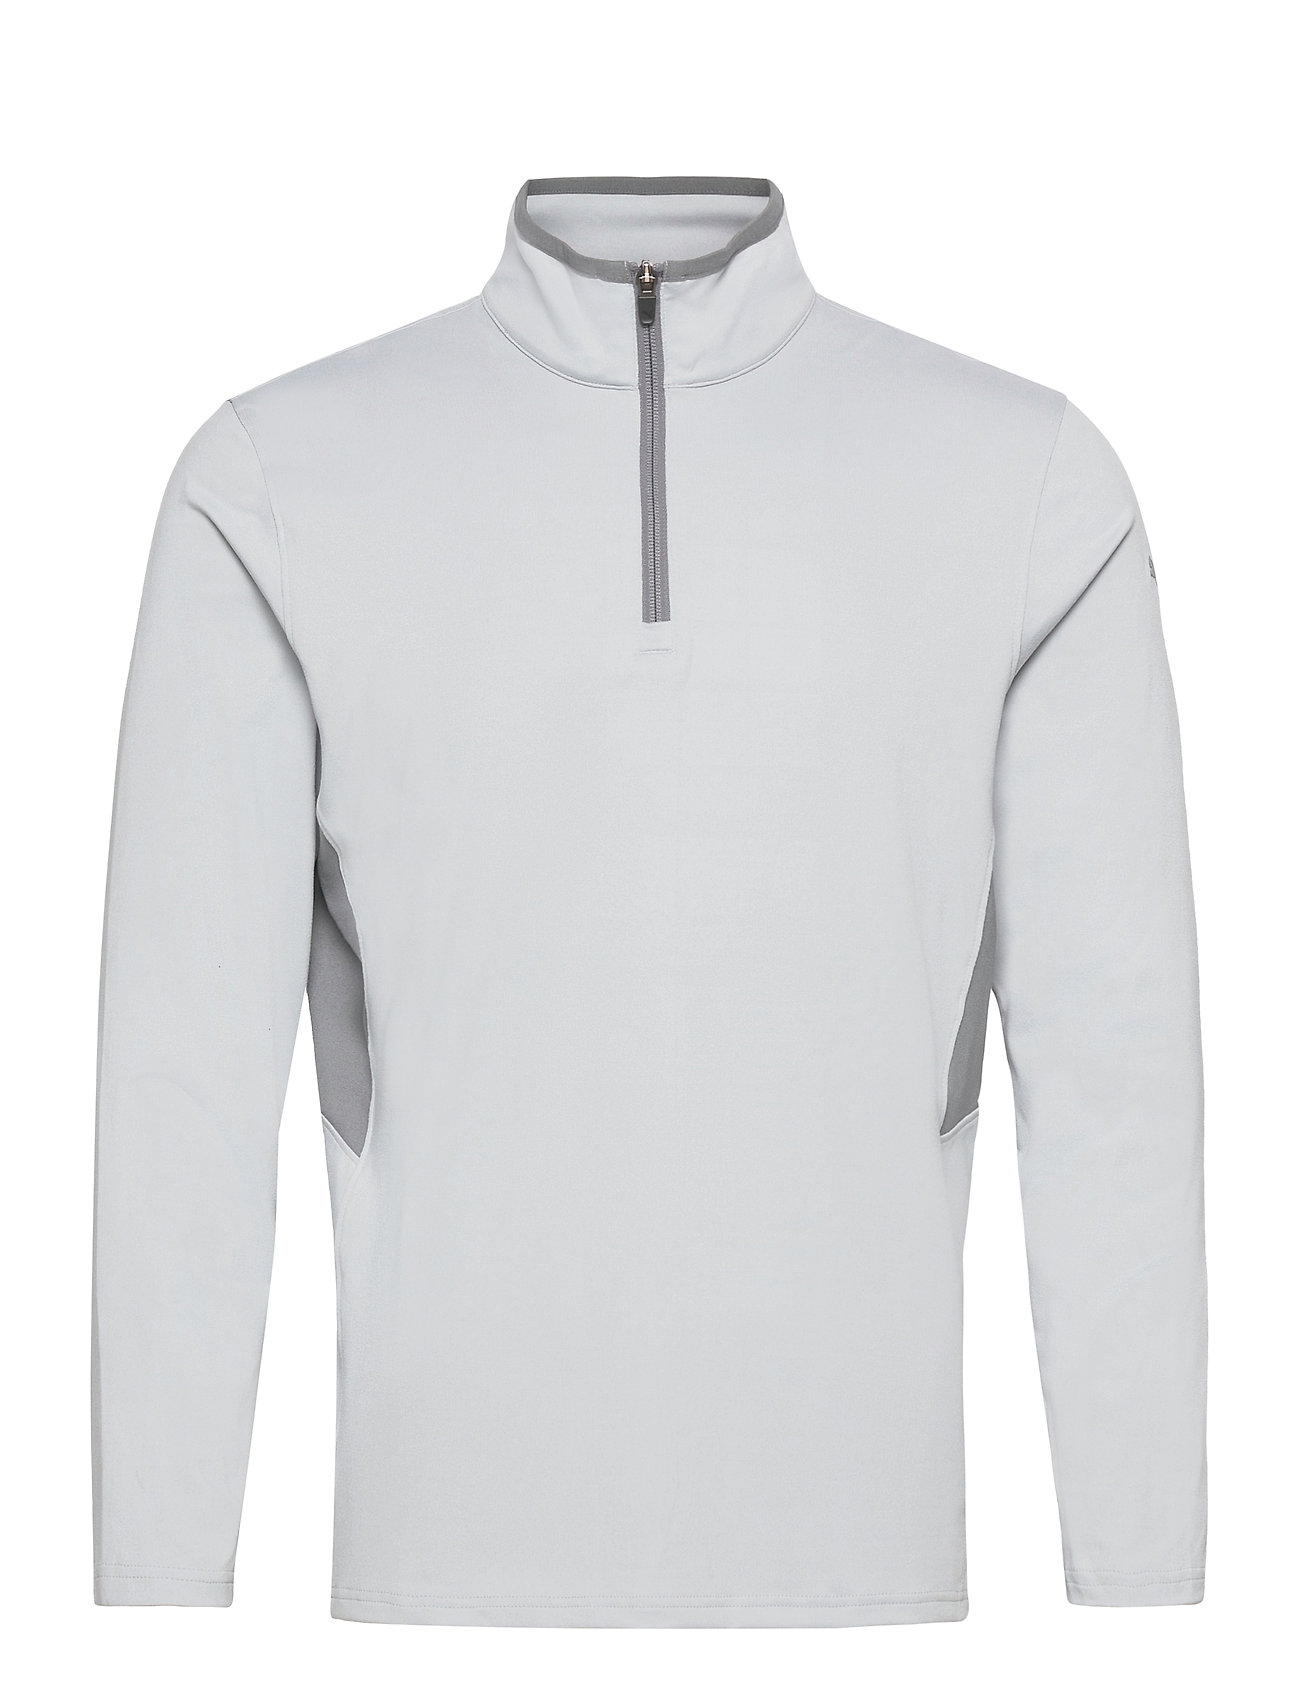 Rotation 1/4 Zip Outerwear Sport Jackets Harmaa PUMA Golf